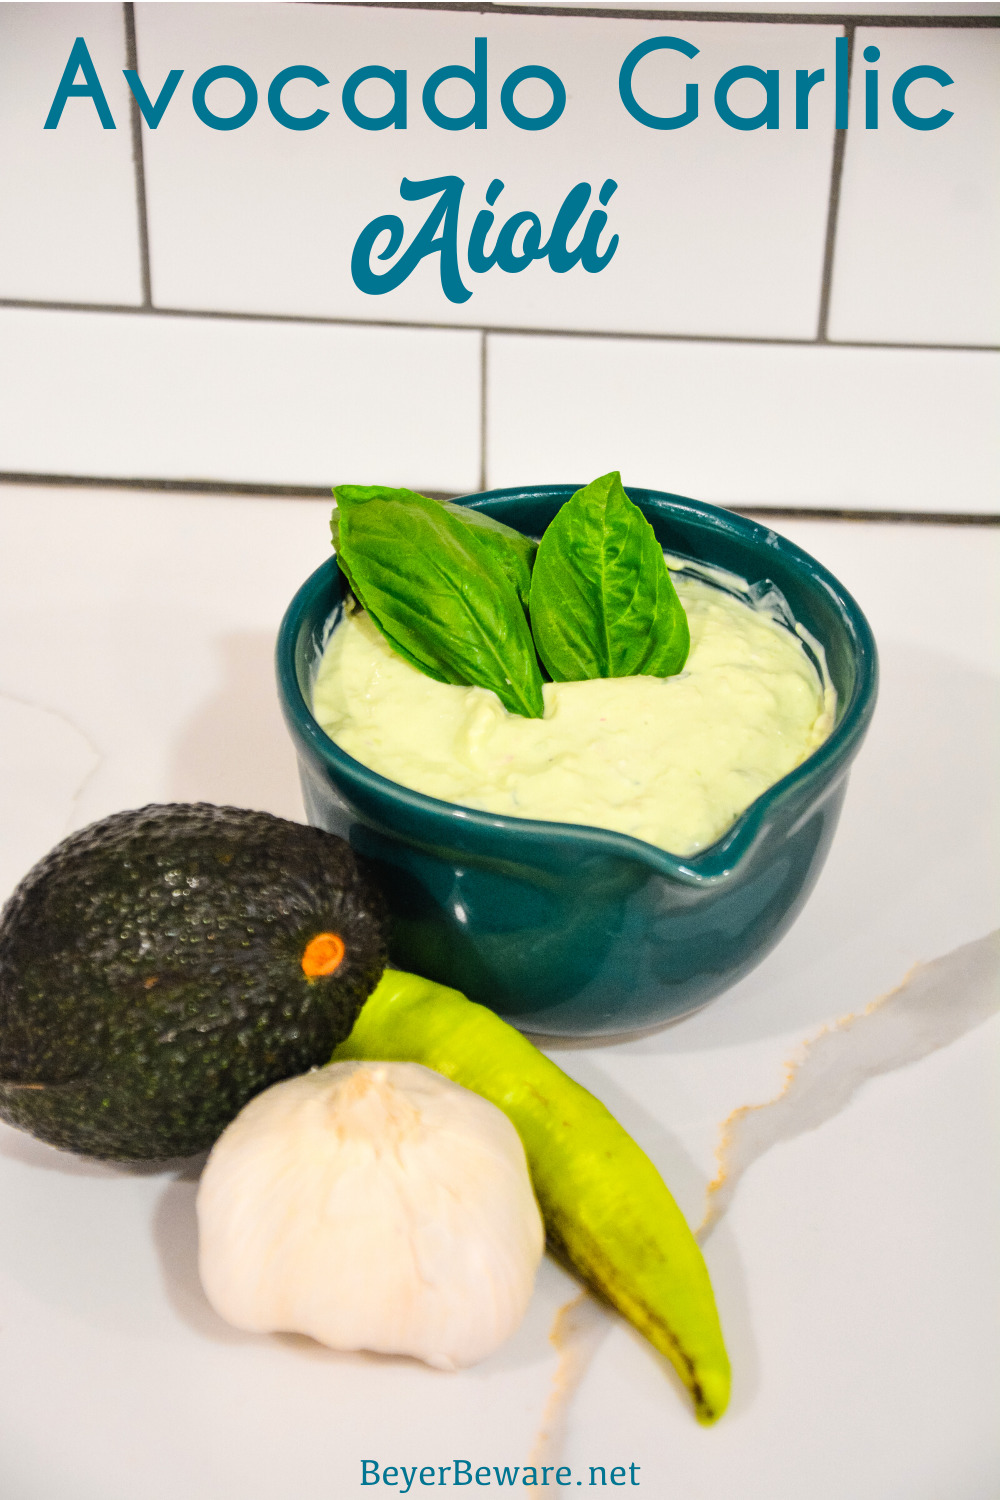 Avocado garlic aioli is a simple aioli made in the food processor with avocado, basil, mayonnaise, garlic, shallots, and lemon juice.